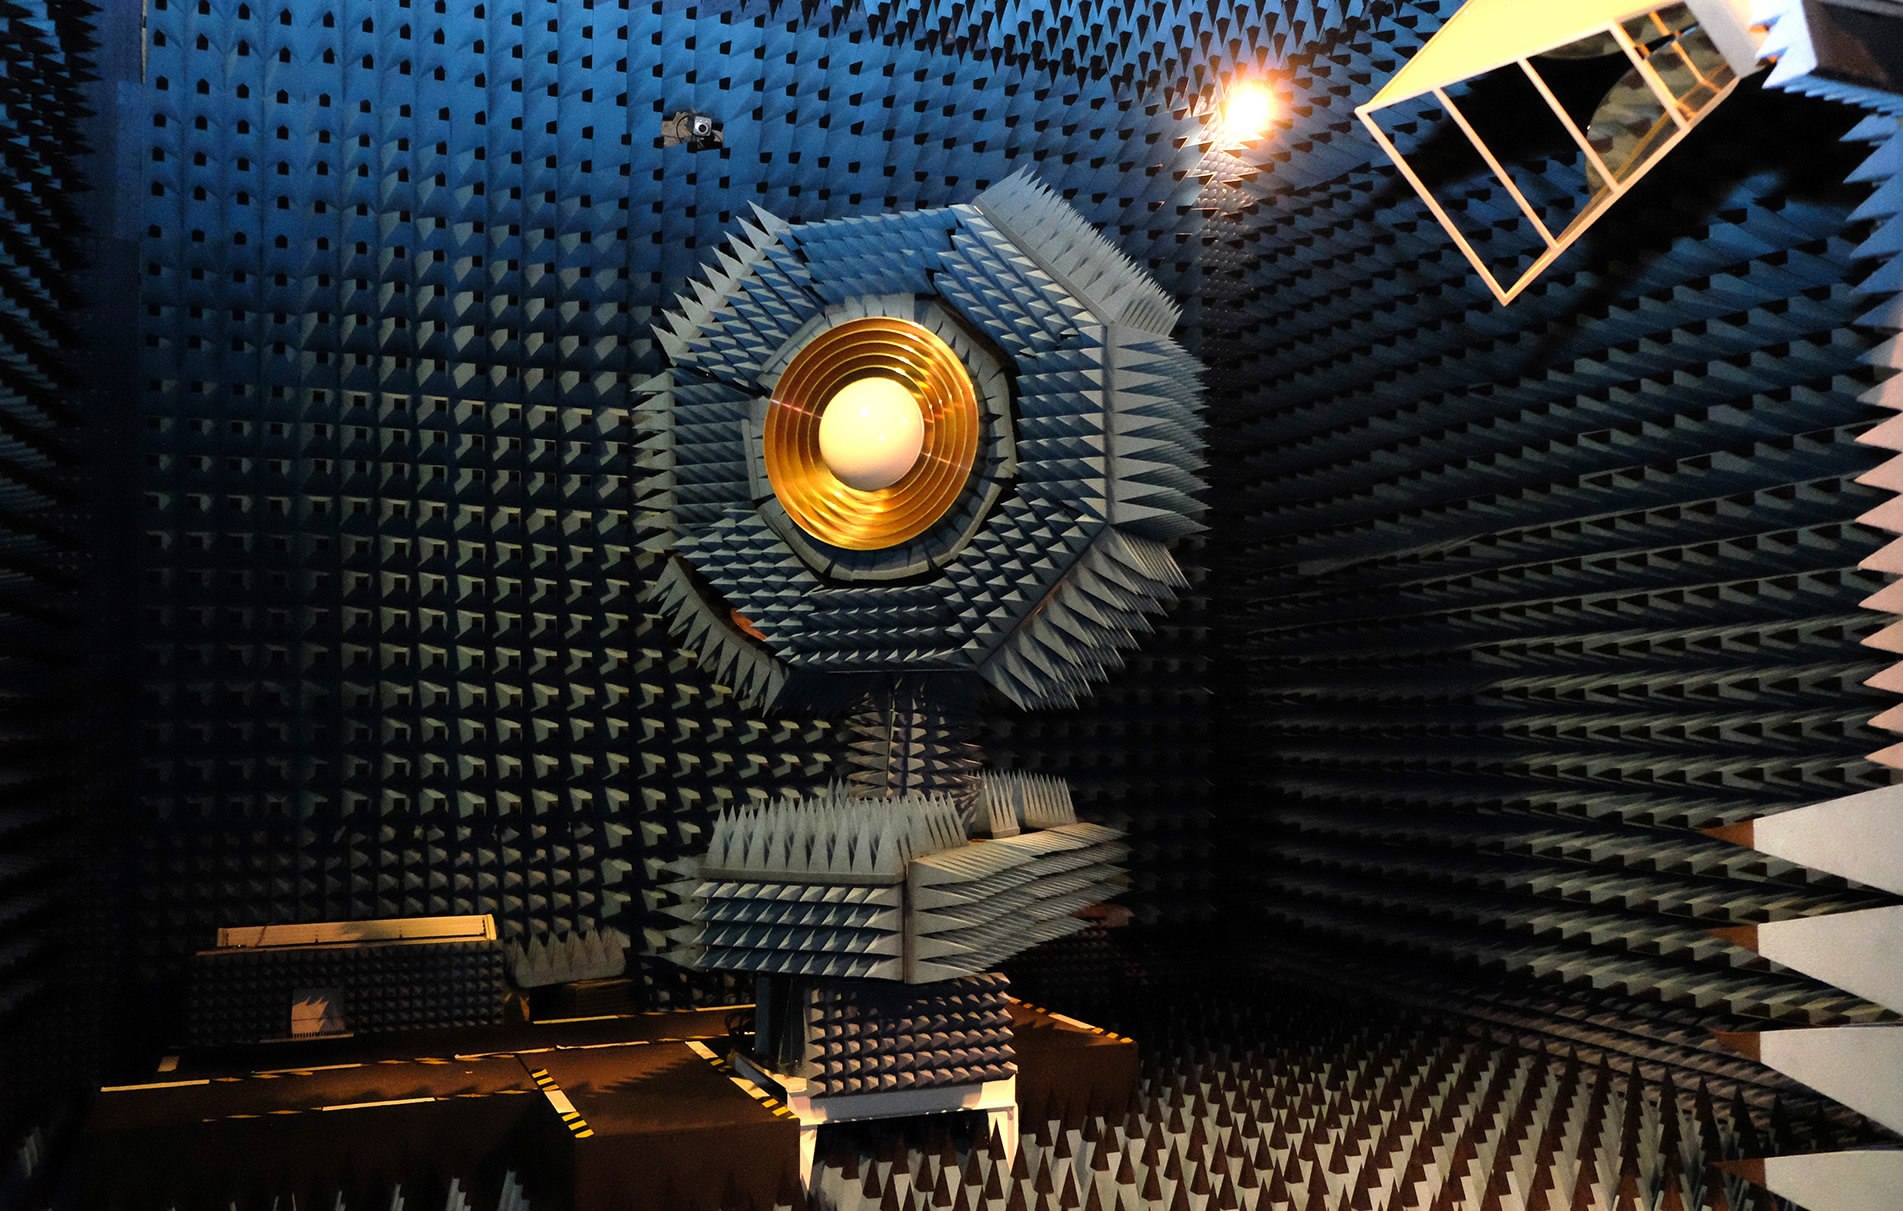 'Bionic ear' enables Australia's Parkes telescope to hear more of universe